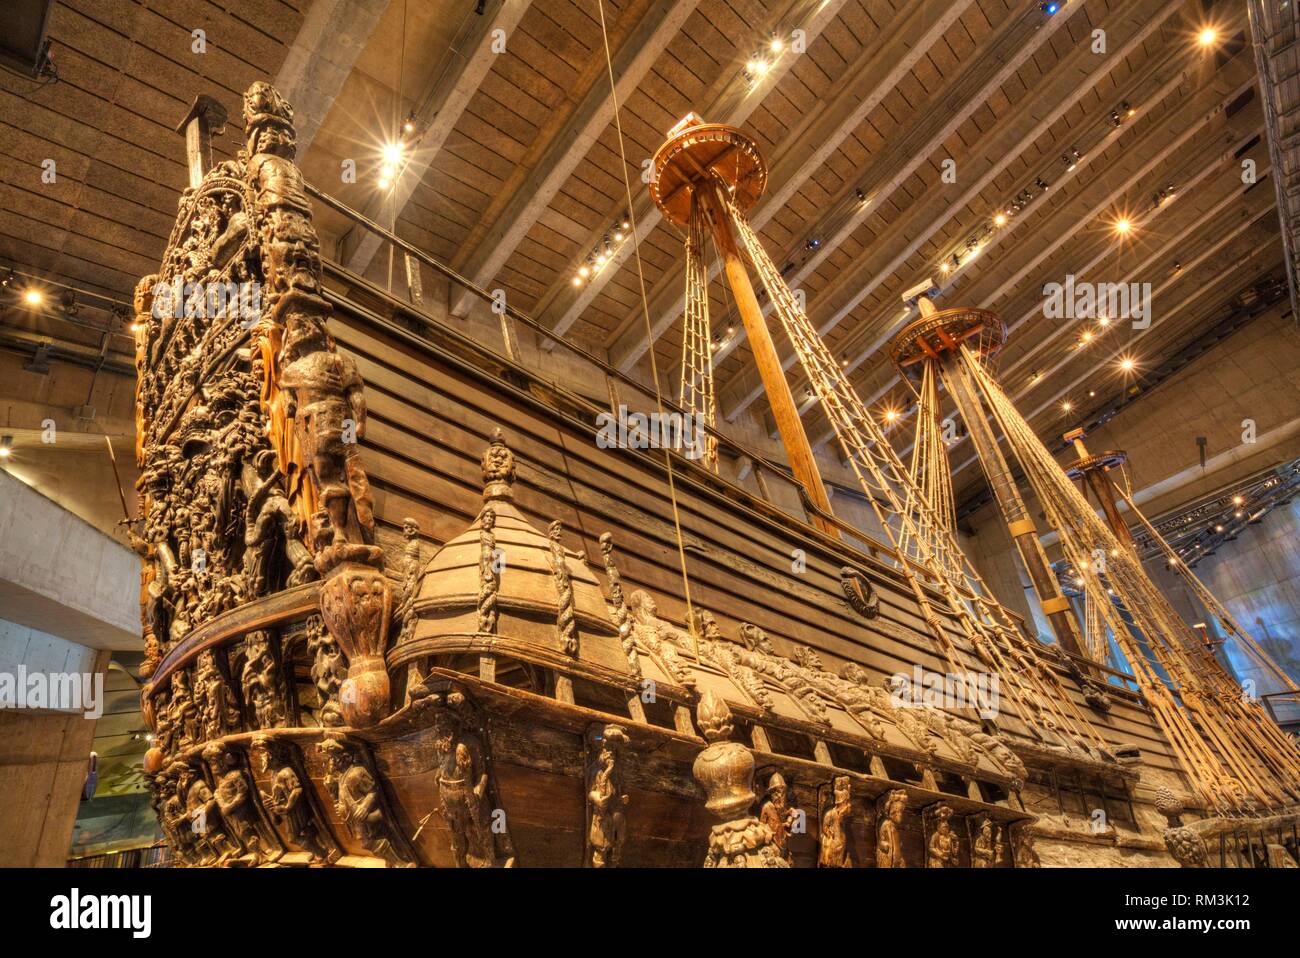 Stern, 17th Century Warship, Vasa Maritime Museum (Vasamuseet), Djurgarden Island, Stockholm, Sweden Stock Photo